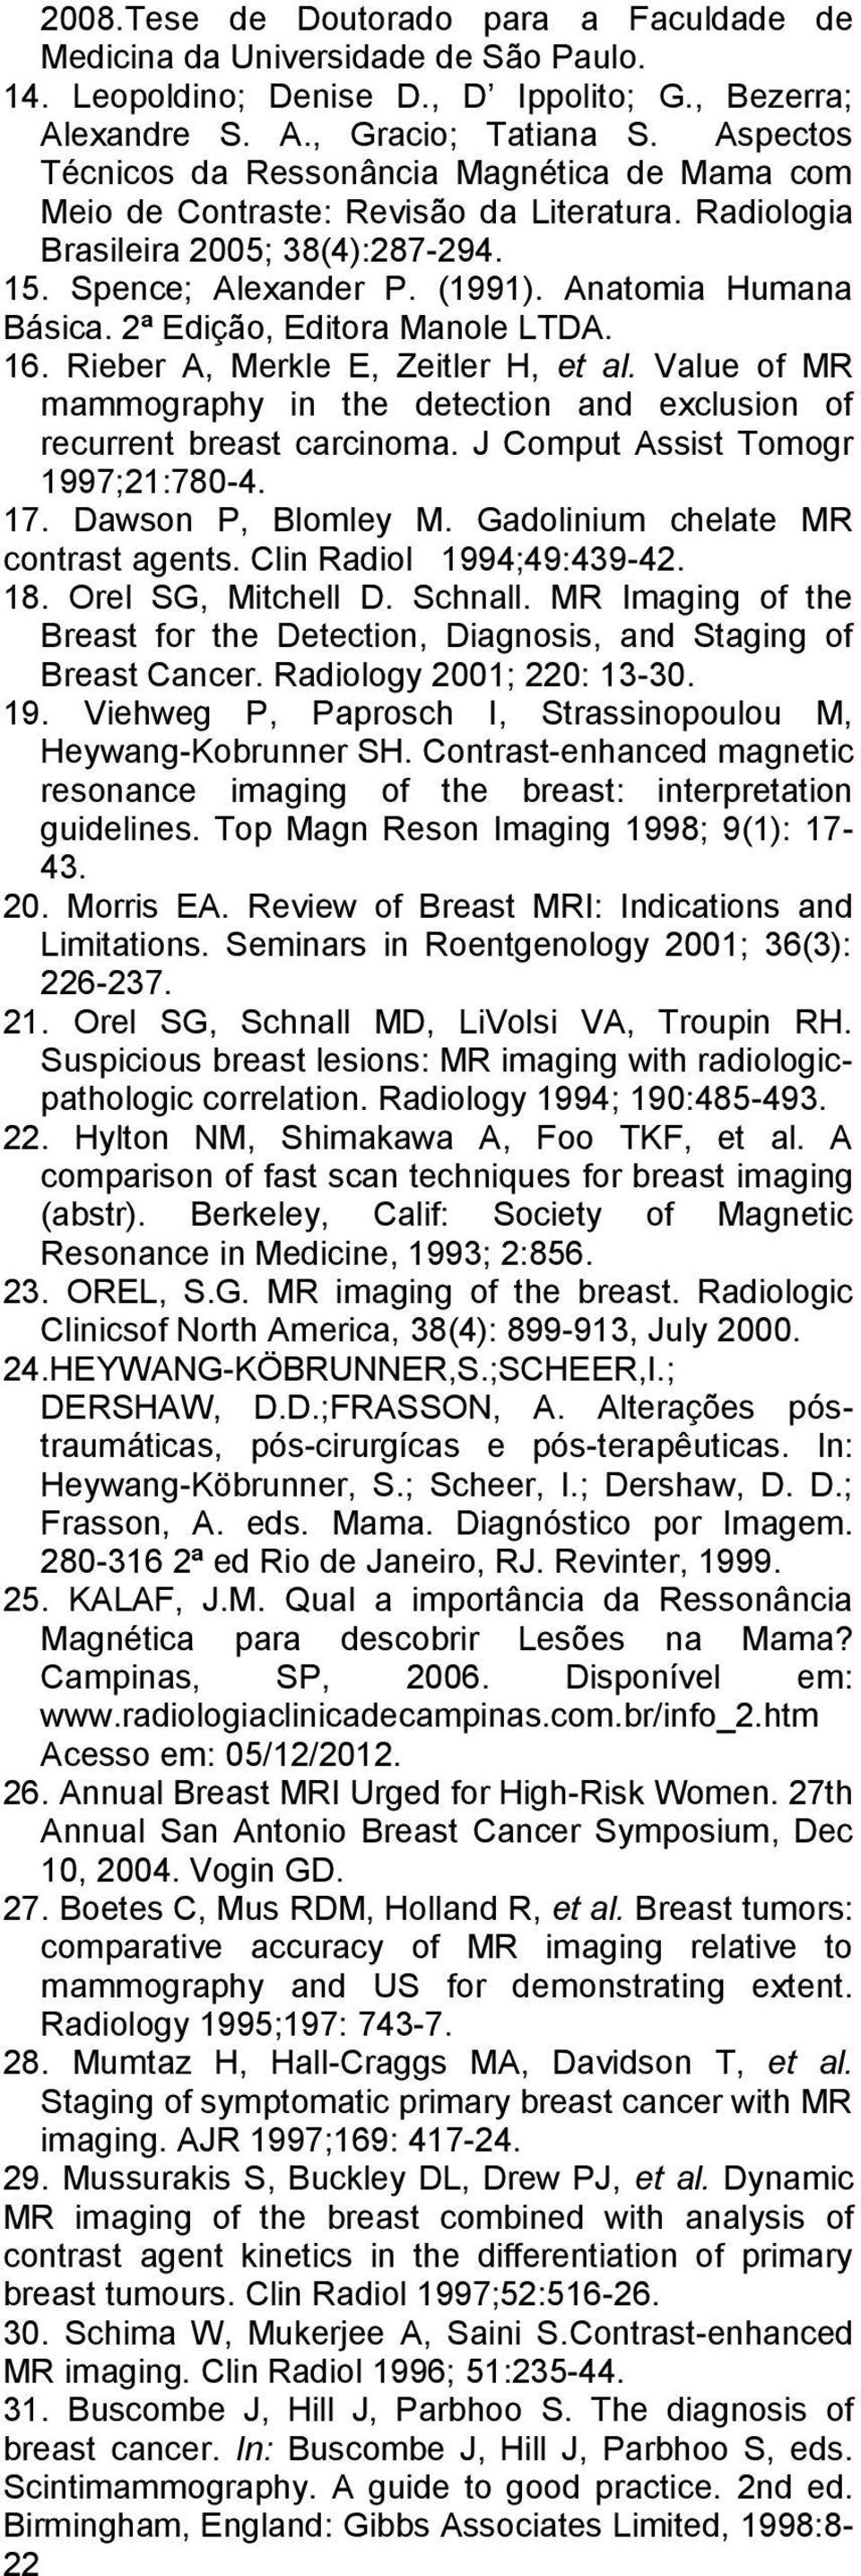 2ª Edição, Editora Manole LTDA. 16. Rieber A, Merkle E, Zeitler H, et al. Value of MR mammography in the detection and exclusion of recurrent breast carcinoma. J Comput Assist Tomogr 1997;21:780-4.